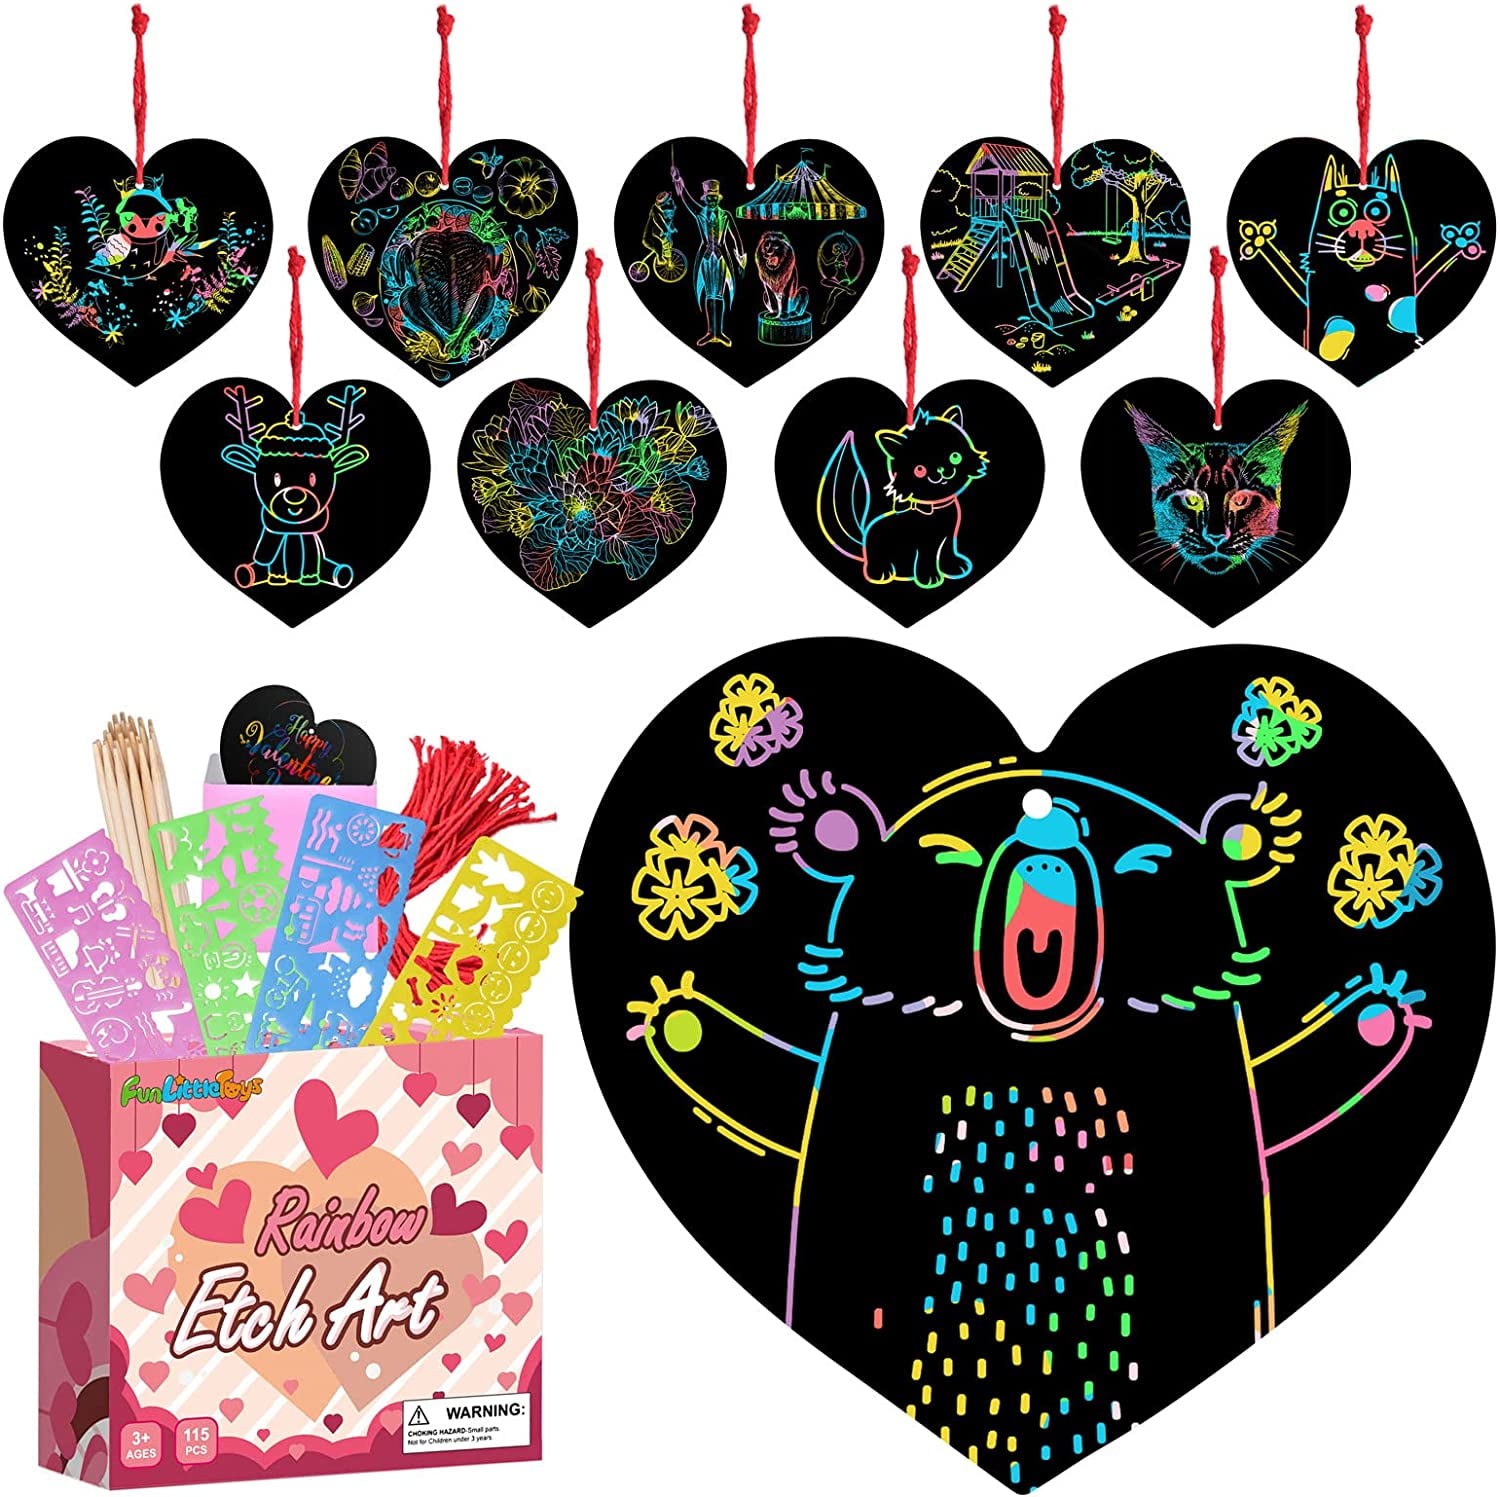 28 Pieces Valentines Crafts for Kids,Rainbow Scratch Paper Ornaments,Heart Shape Scratch Craft Art Kit for Class Valentines DIY Art Activity,School